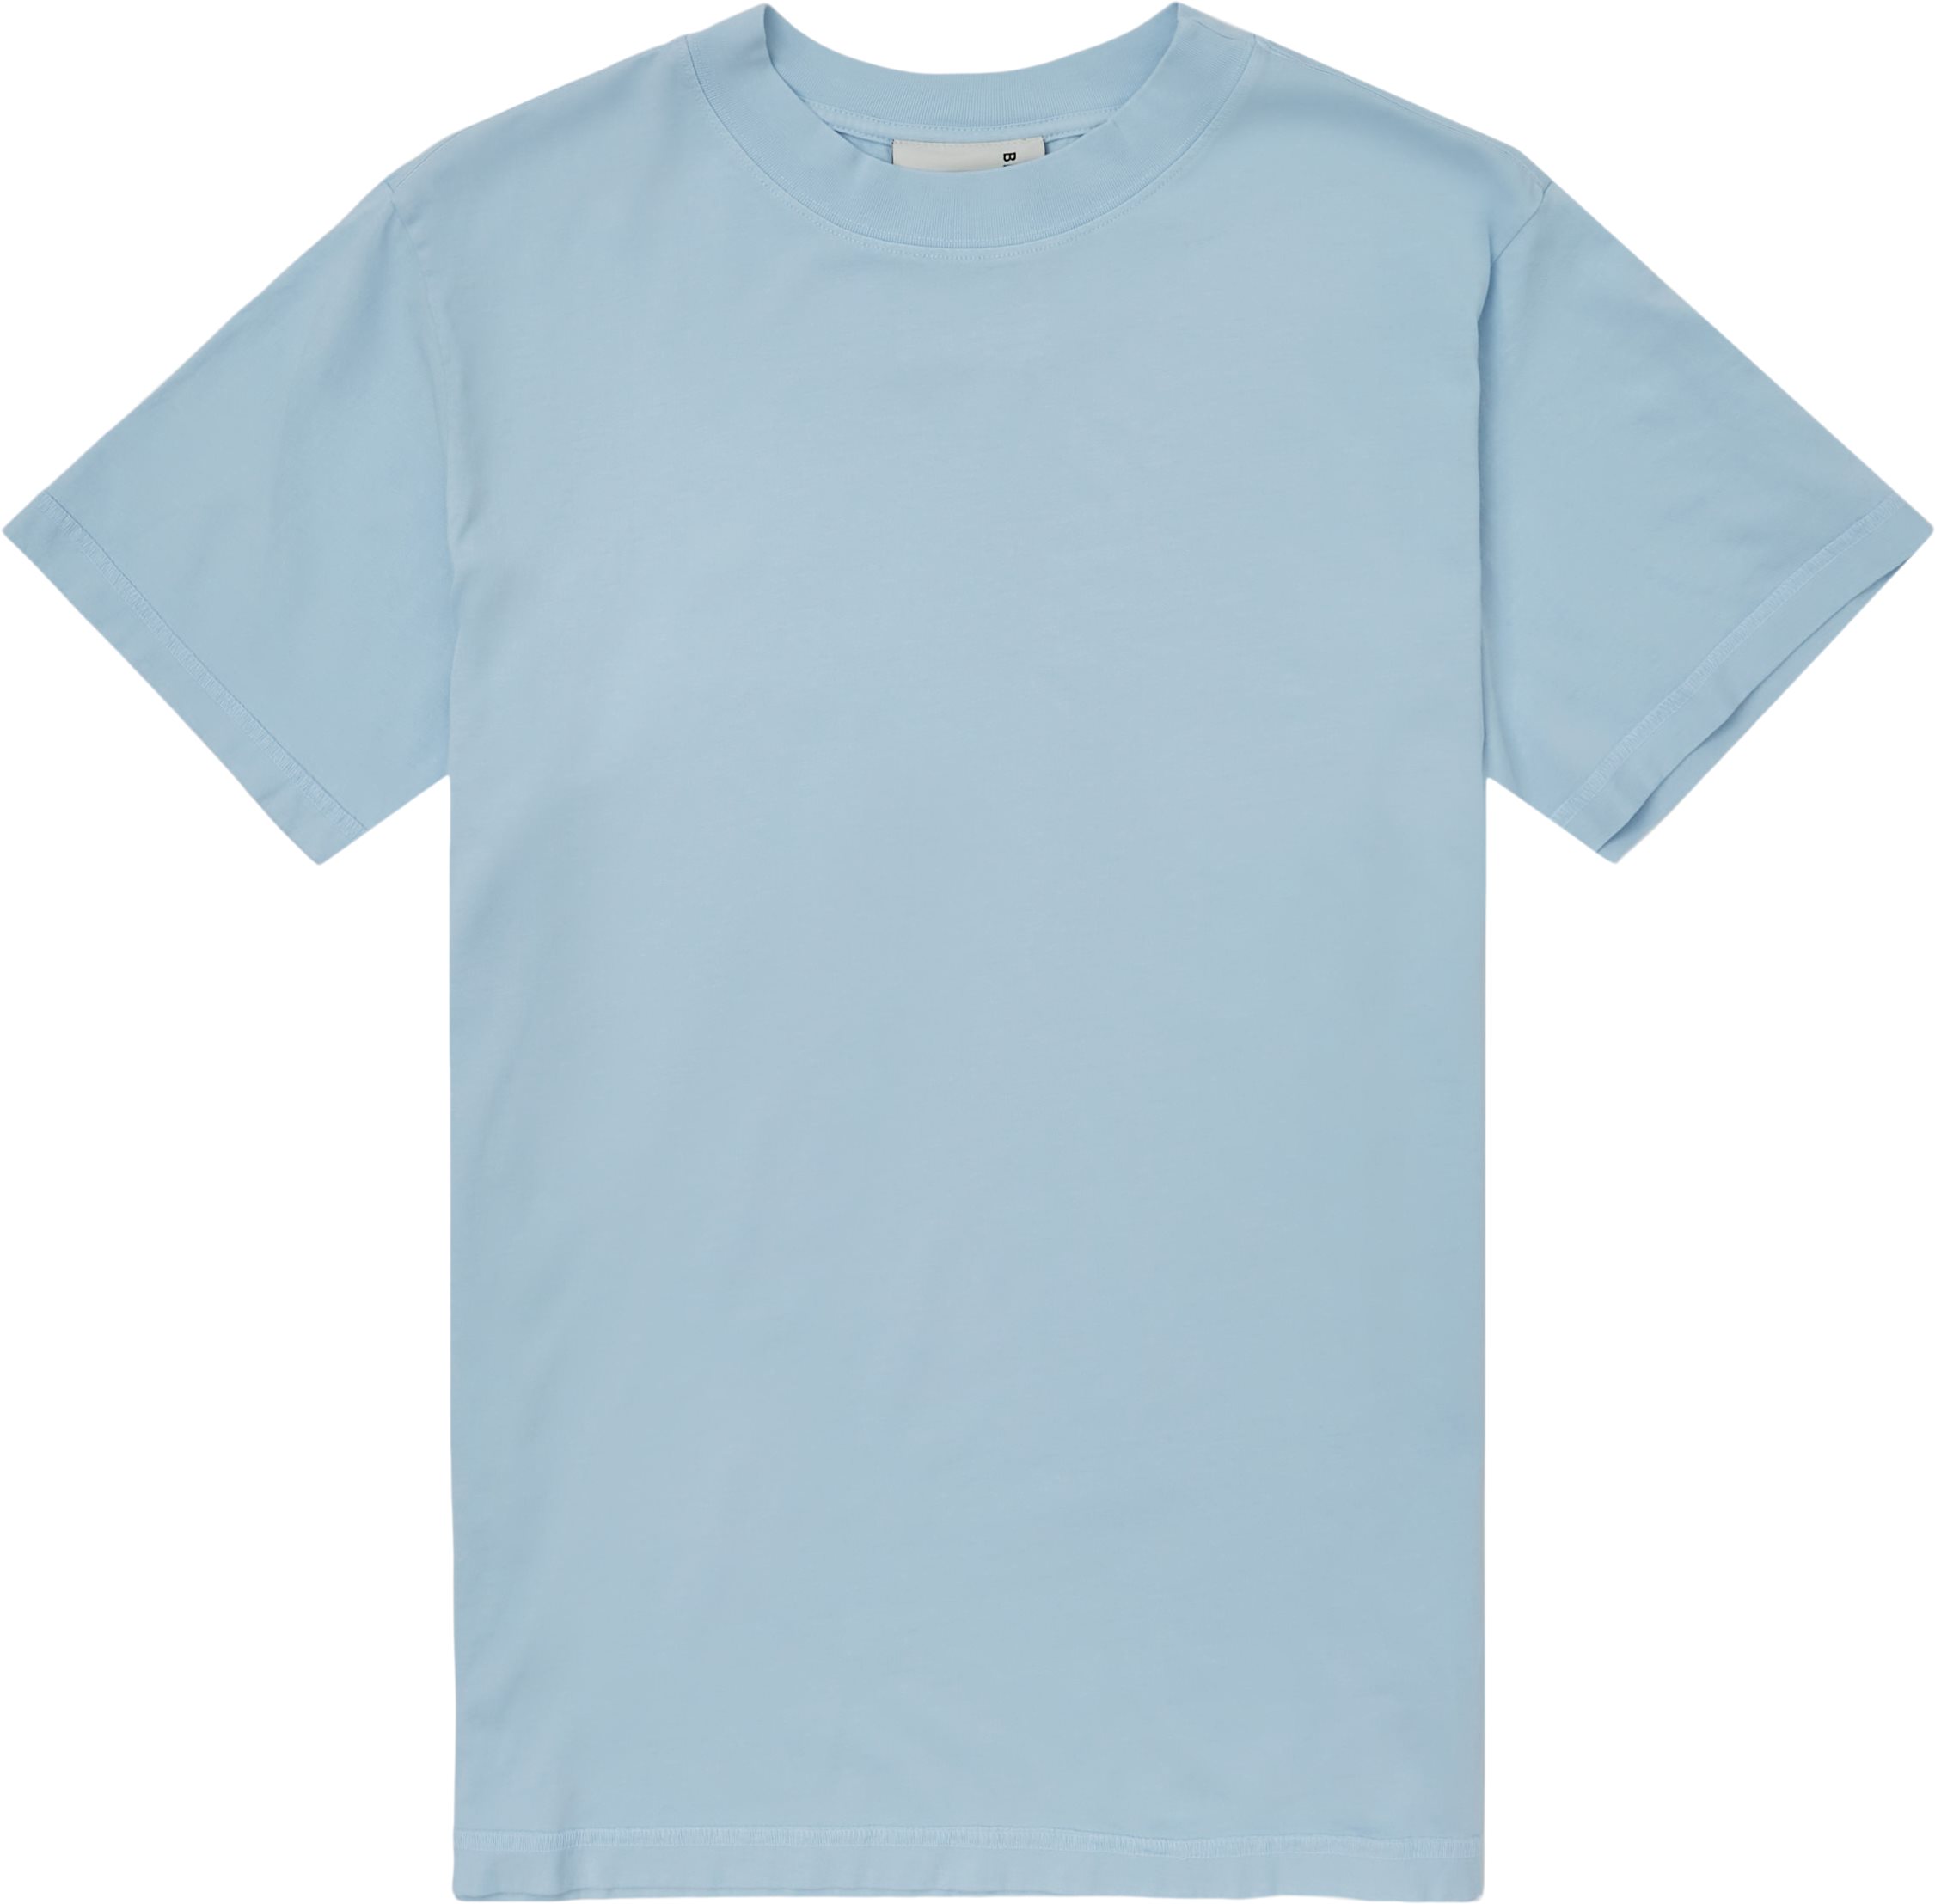 Supima Tee - T-shirts - Oversize fit - Blue